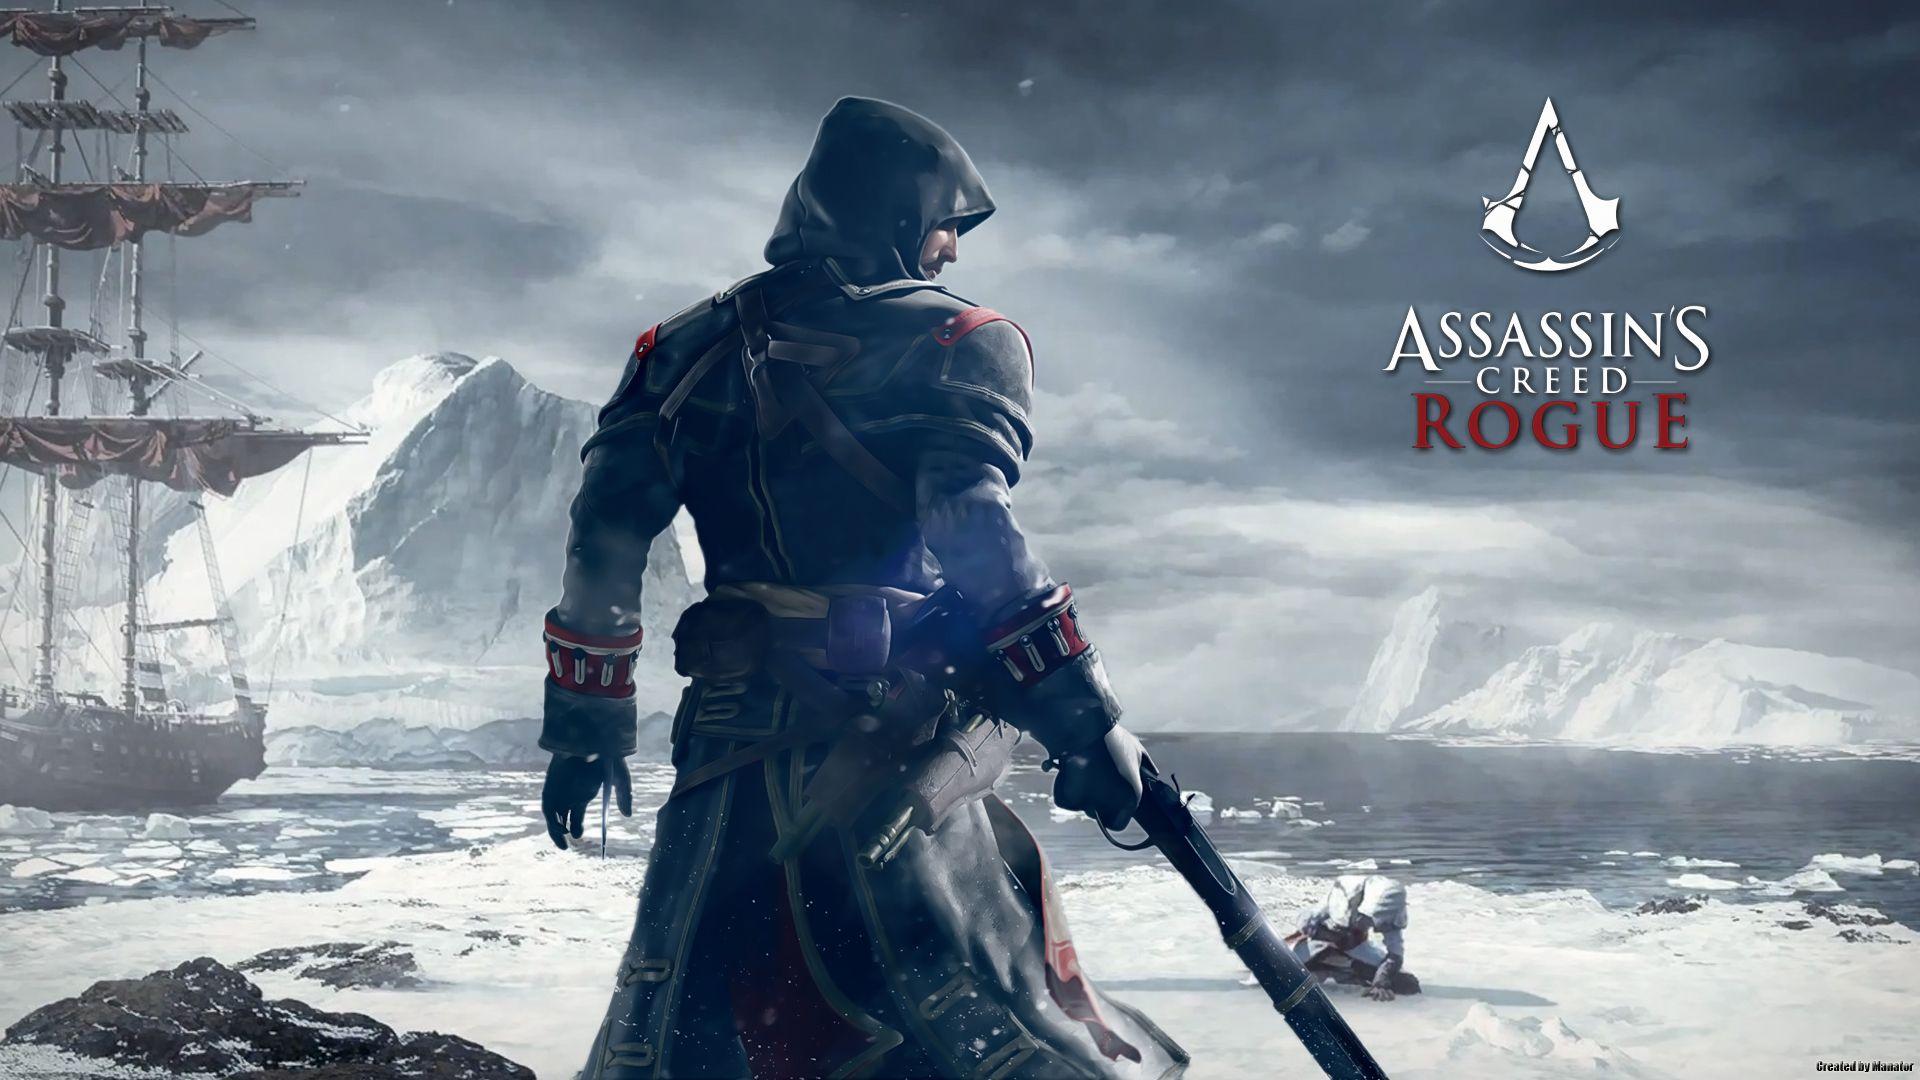 Video Game Assassin's Creed: Rogue wallpaper Desktop, Phone